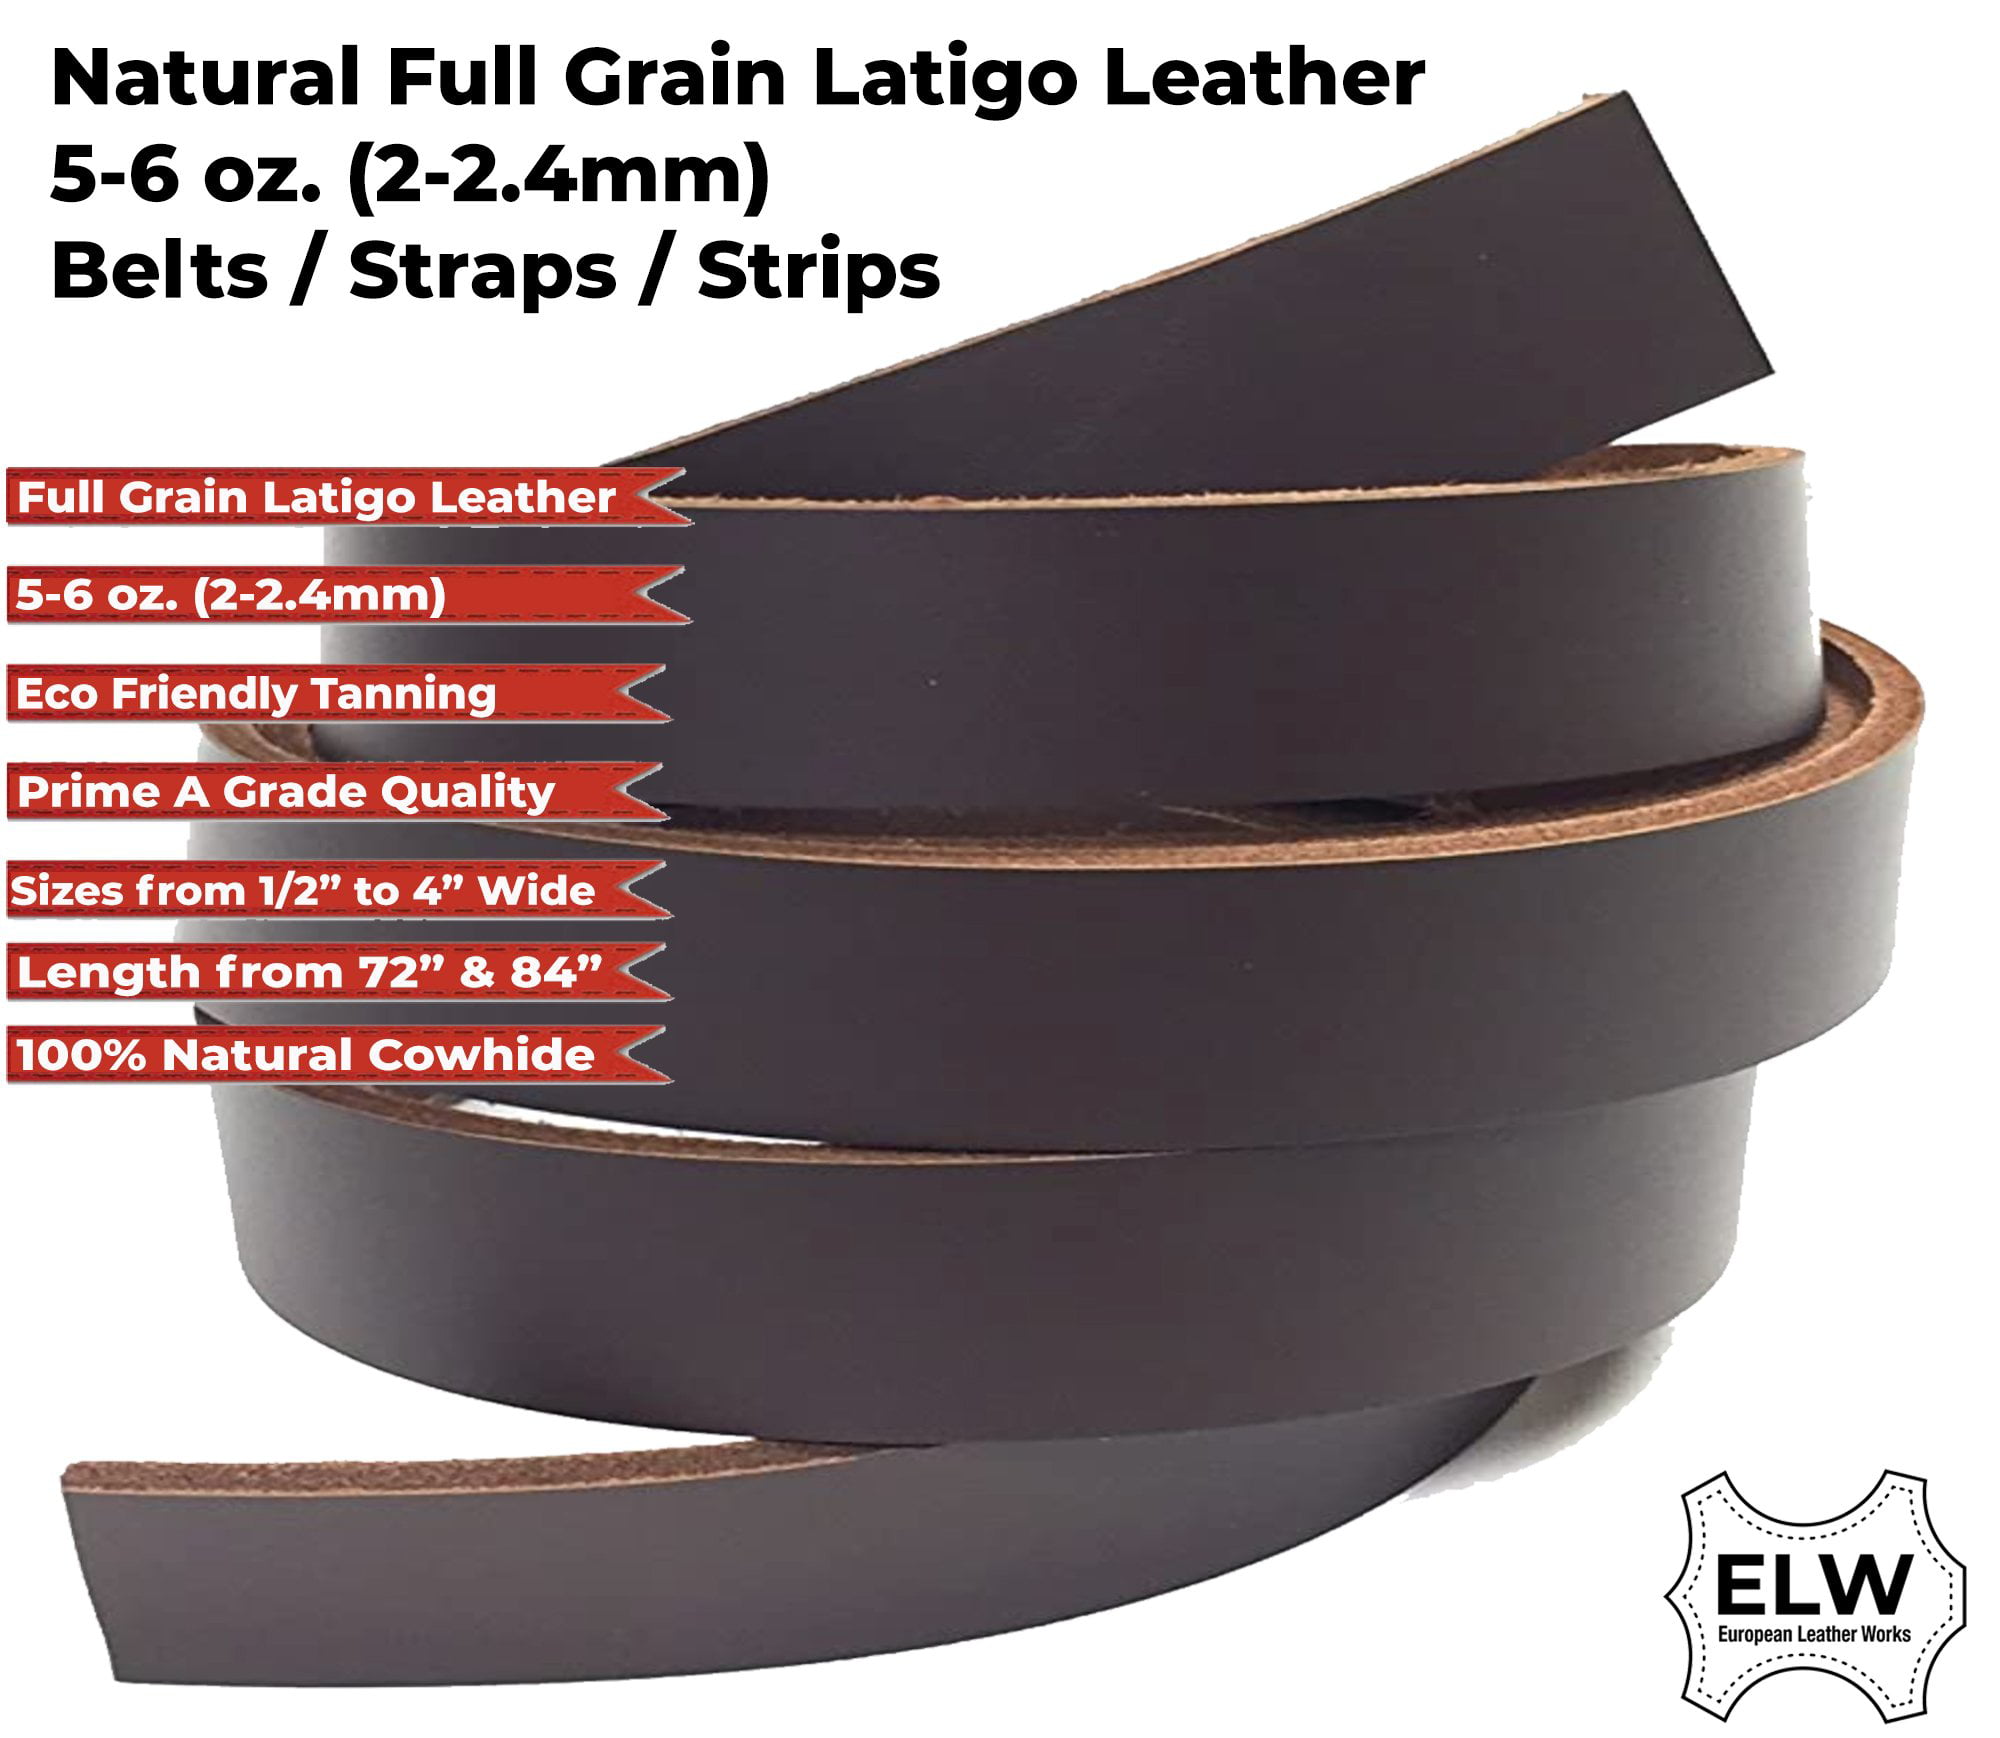 Leather Straps 5/8 Inch Wide 6-7 oz. Mahogany Waxy Latigo Leather Strap up to 96 Inch Long Pitka Leather 2.4 – 2.8 mm 5/8 x 12 